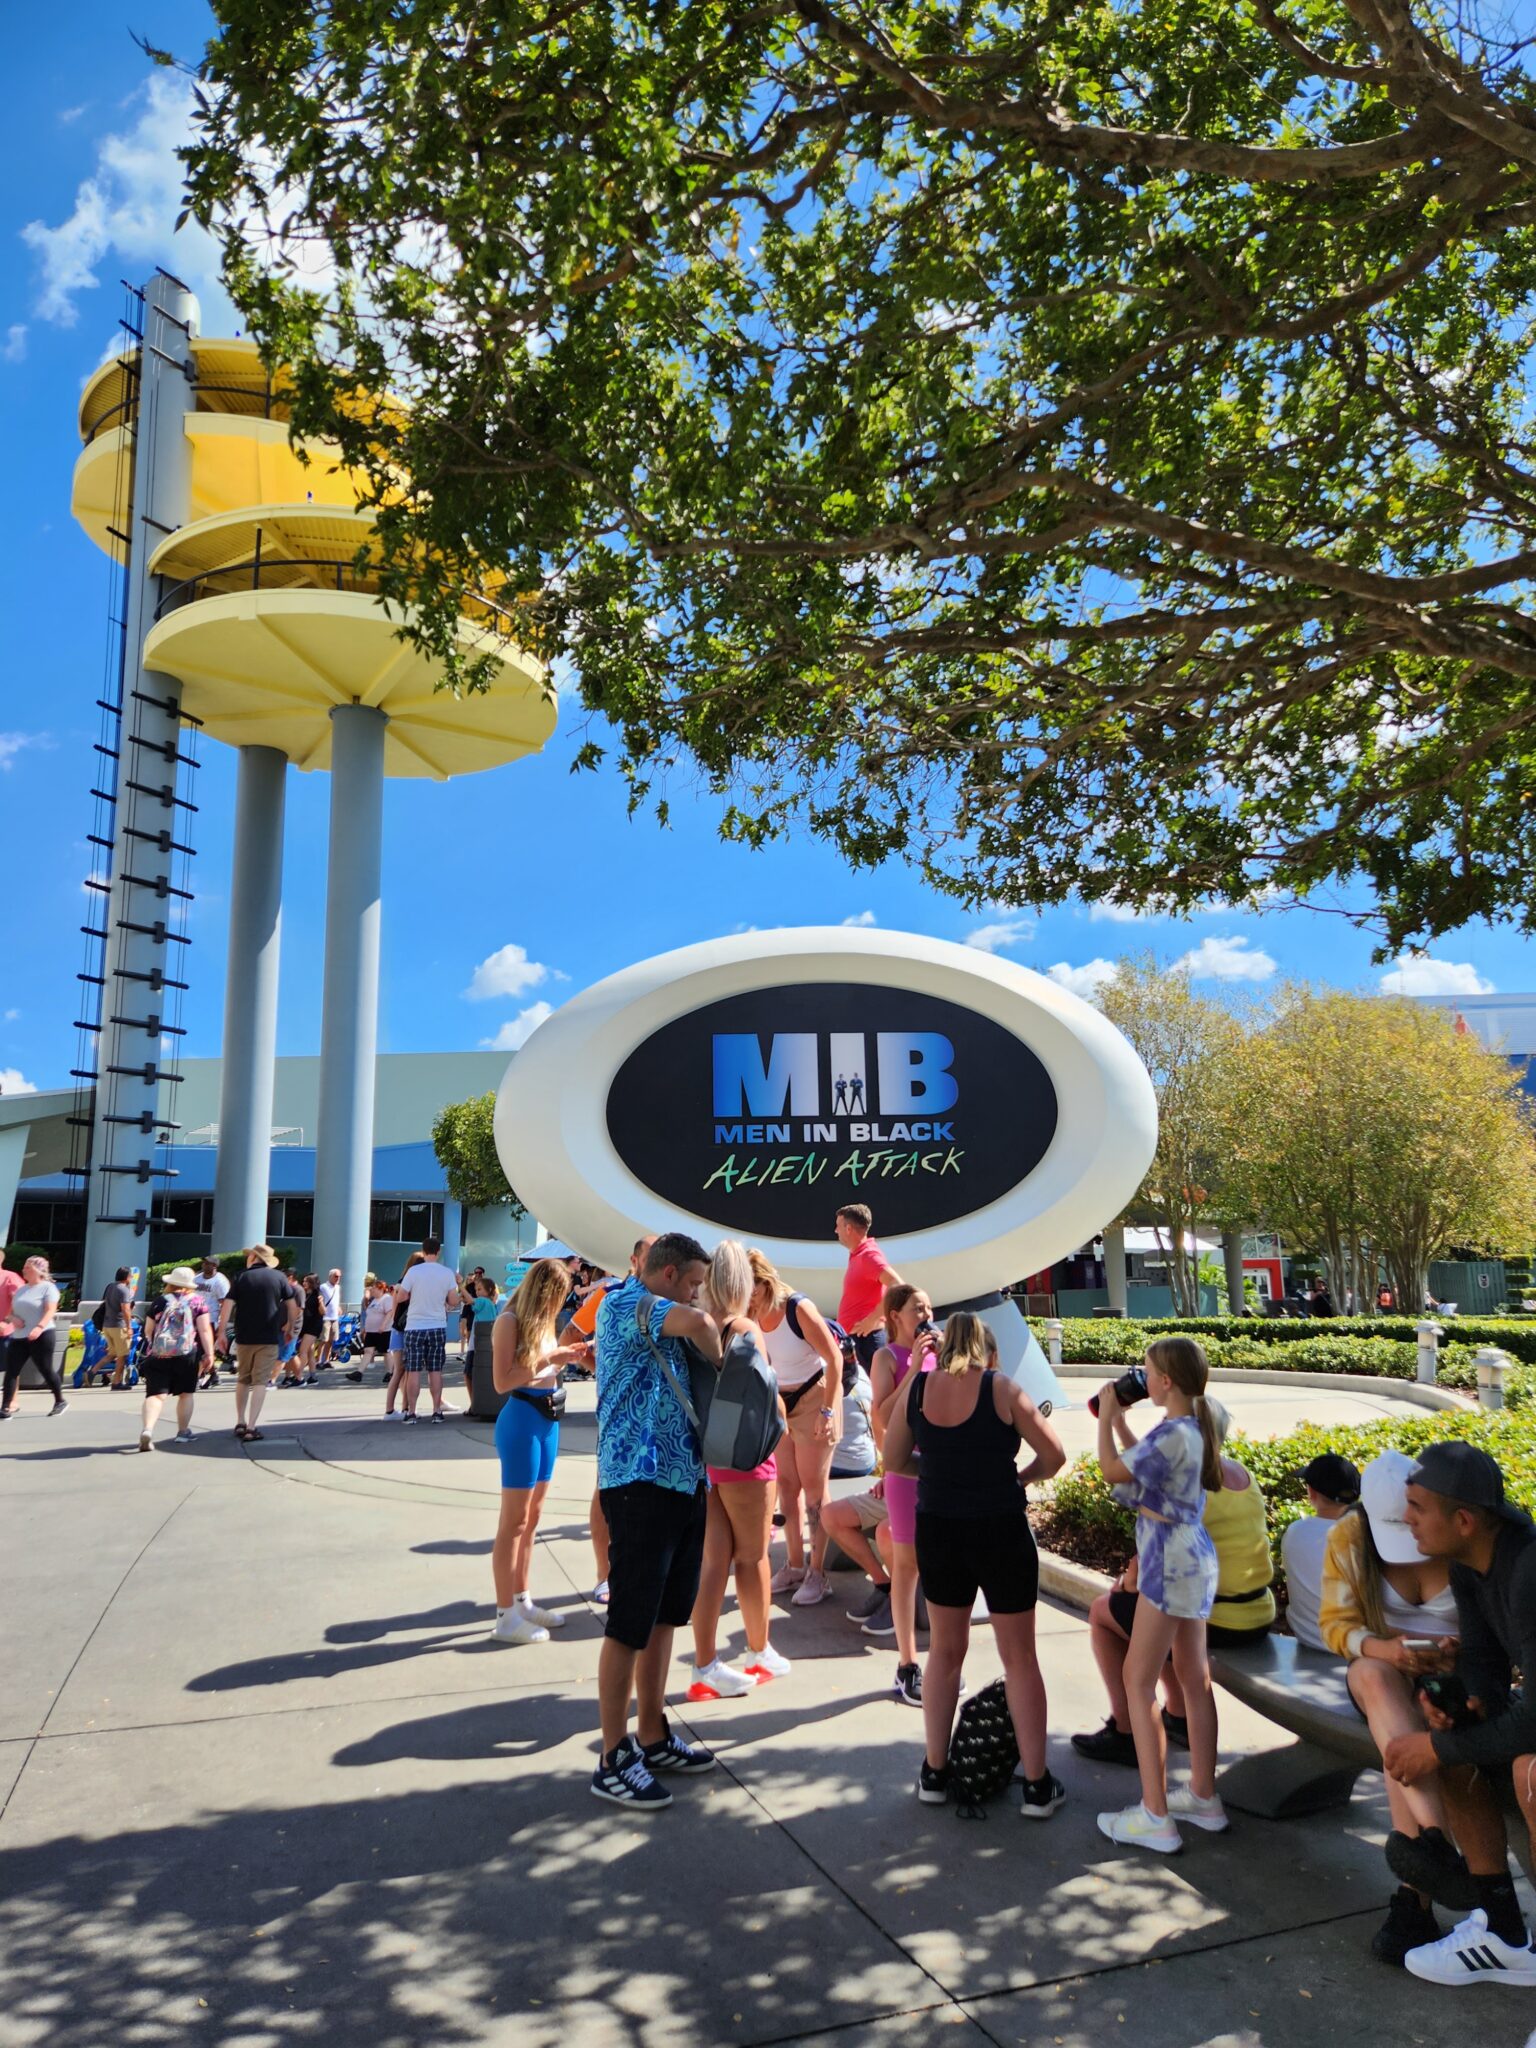 MIB attraction at Universal Studios